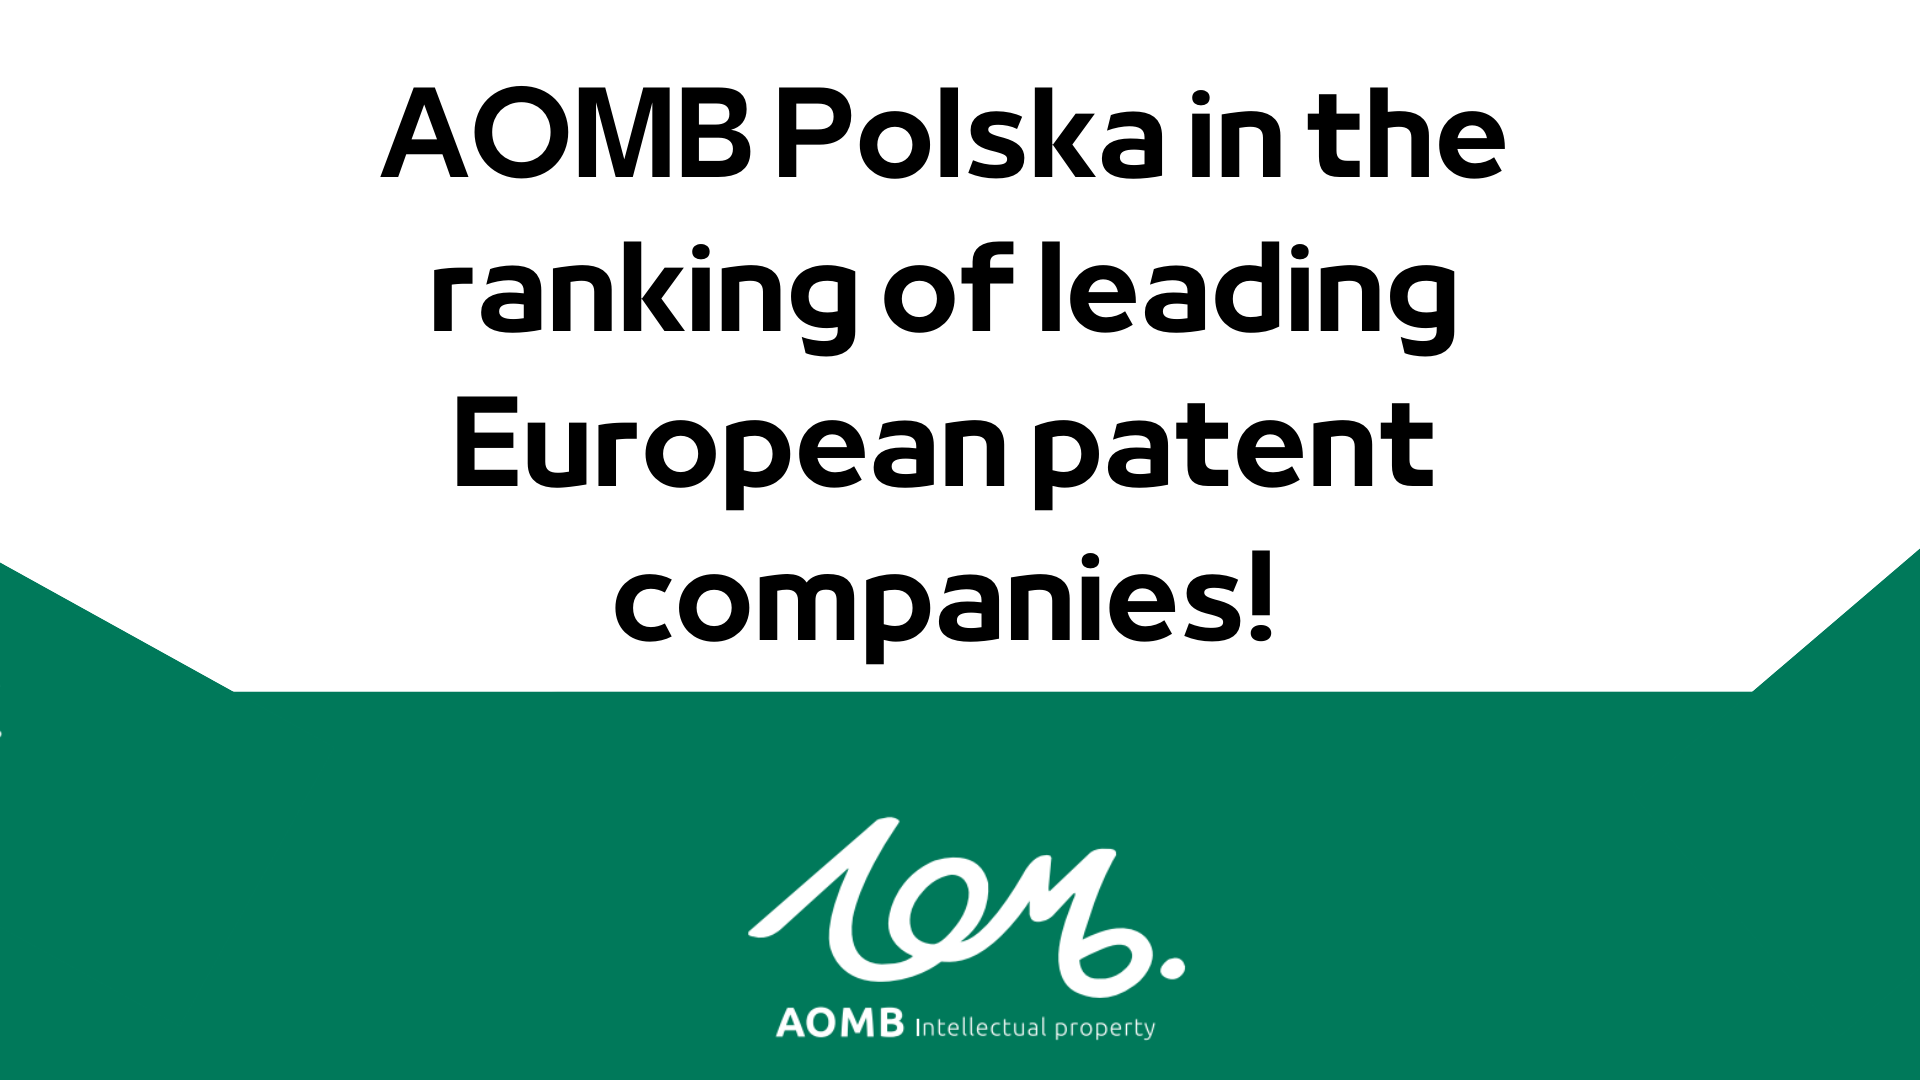 AOMB Polska in the ranking of leading European patent companies!